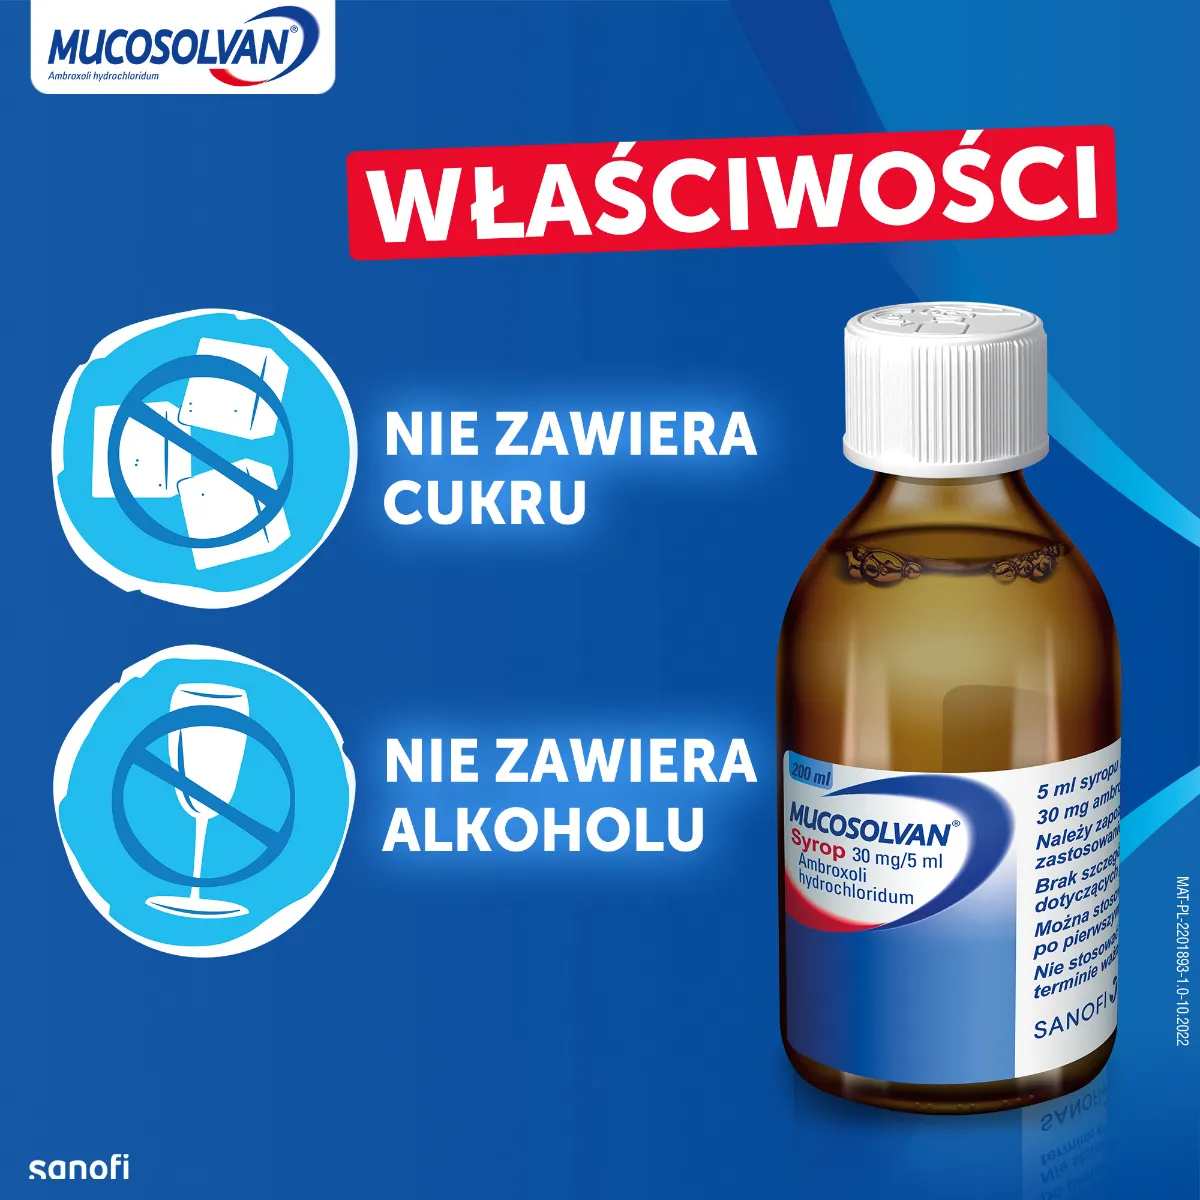 Mucosolvan, 30 mg/5 ml, syrop, 200 ml 